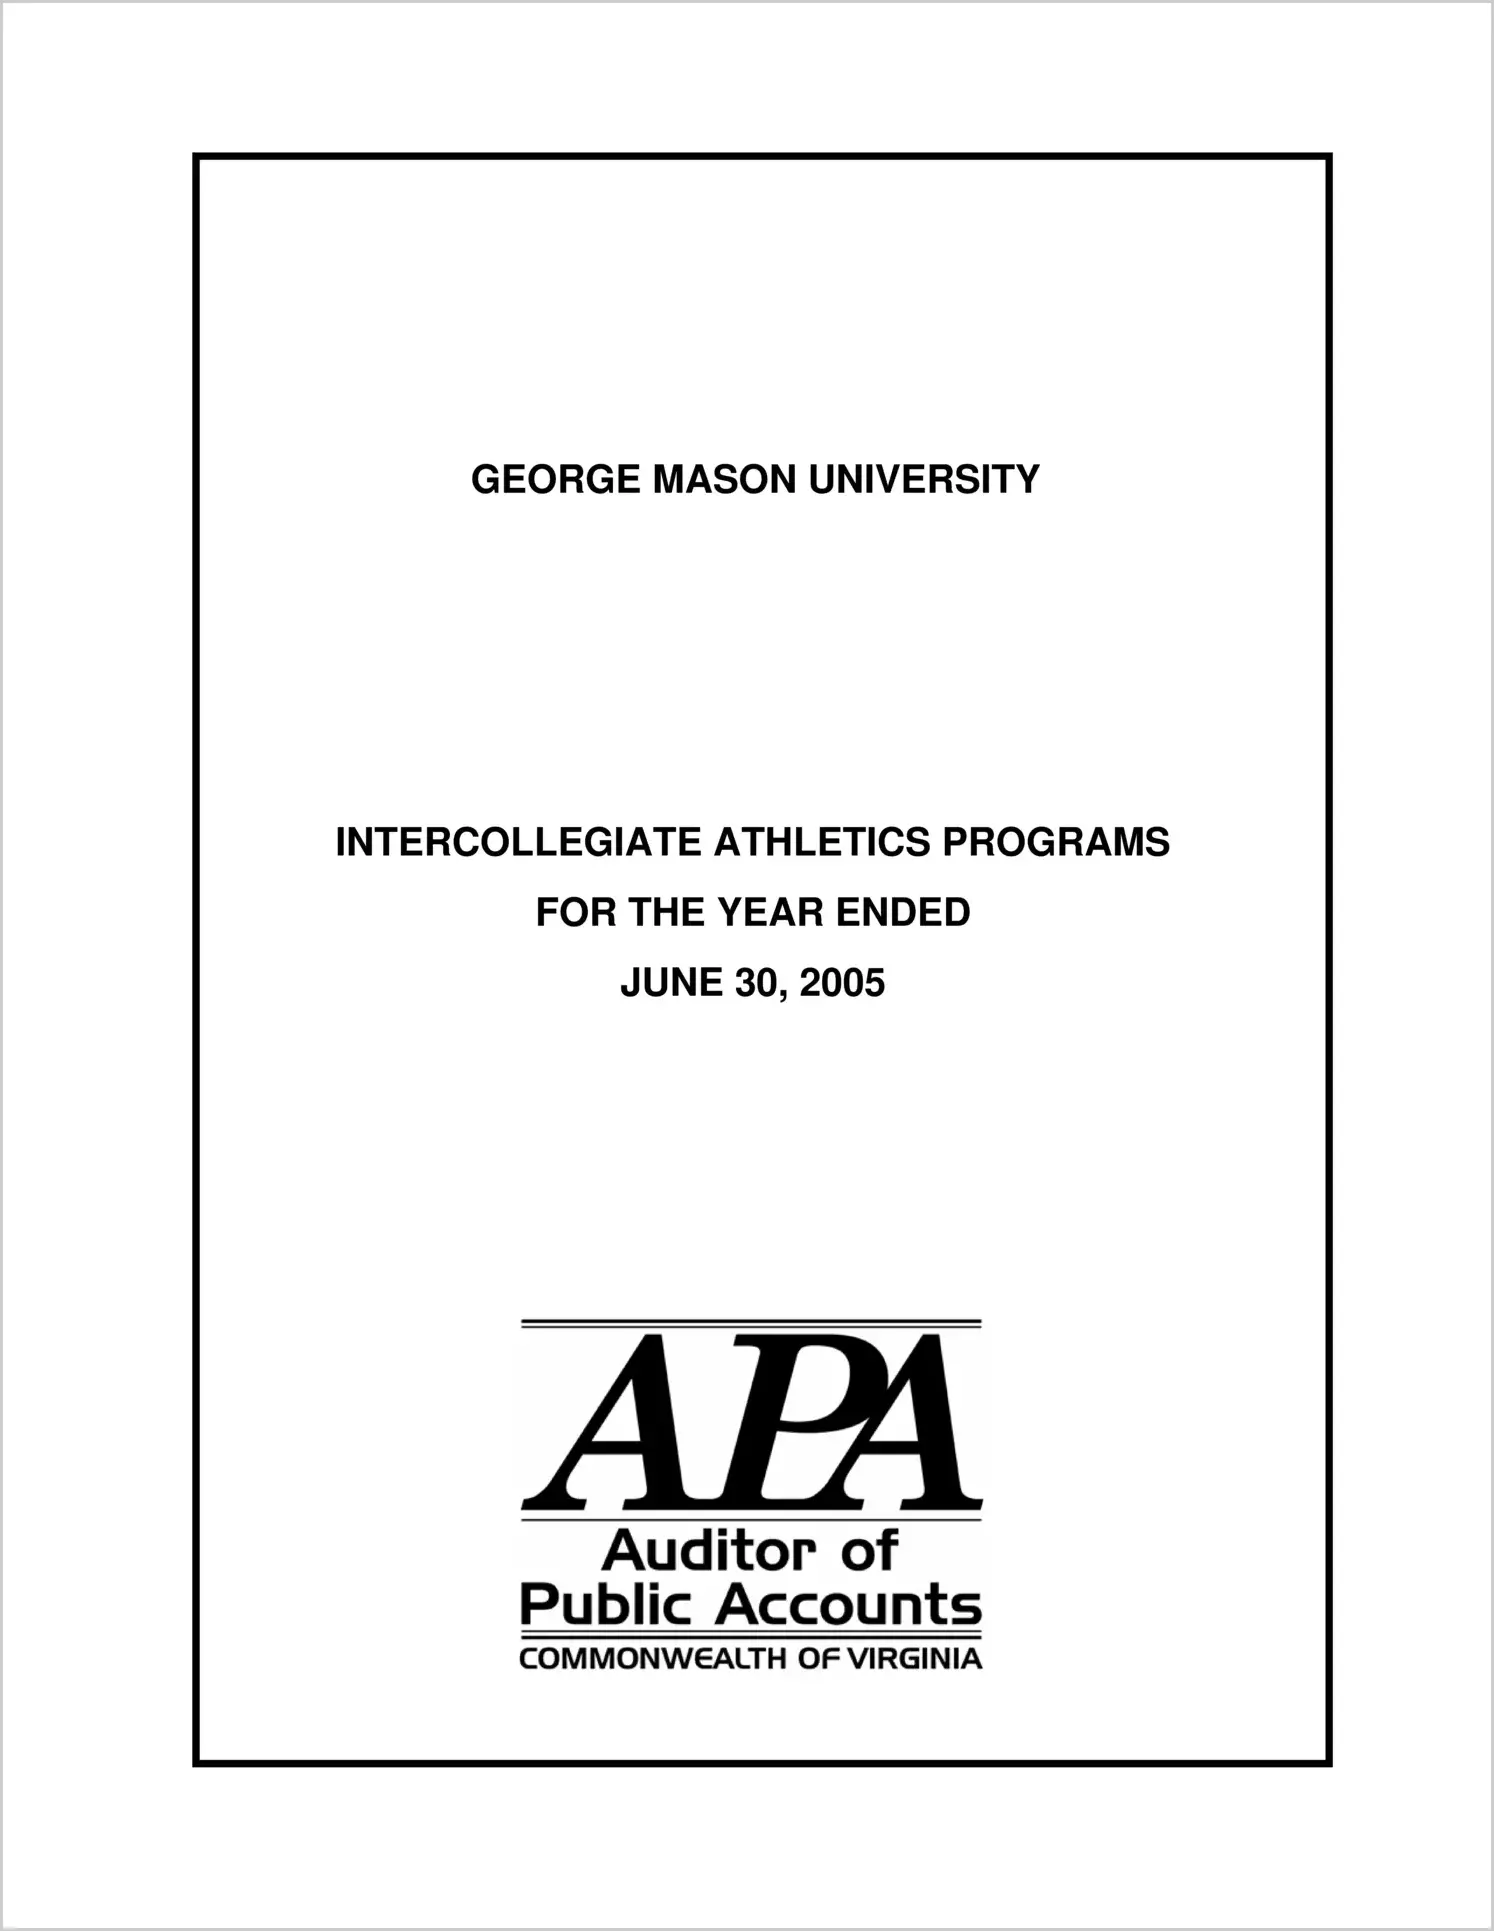 George Mason University Intercollegiate Athletics Programs for the year ended June 30, 2005